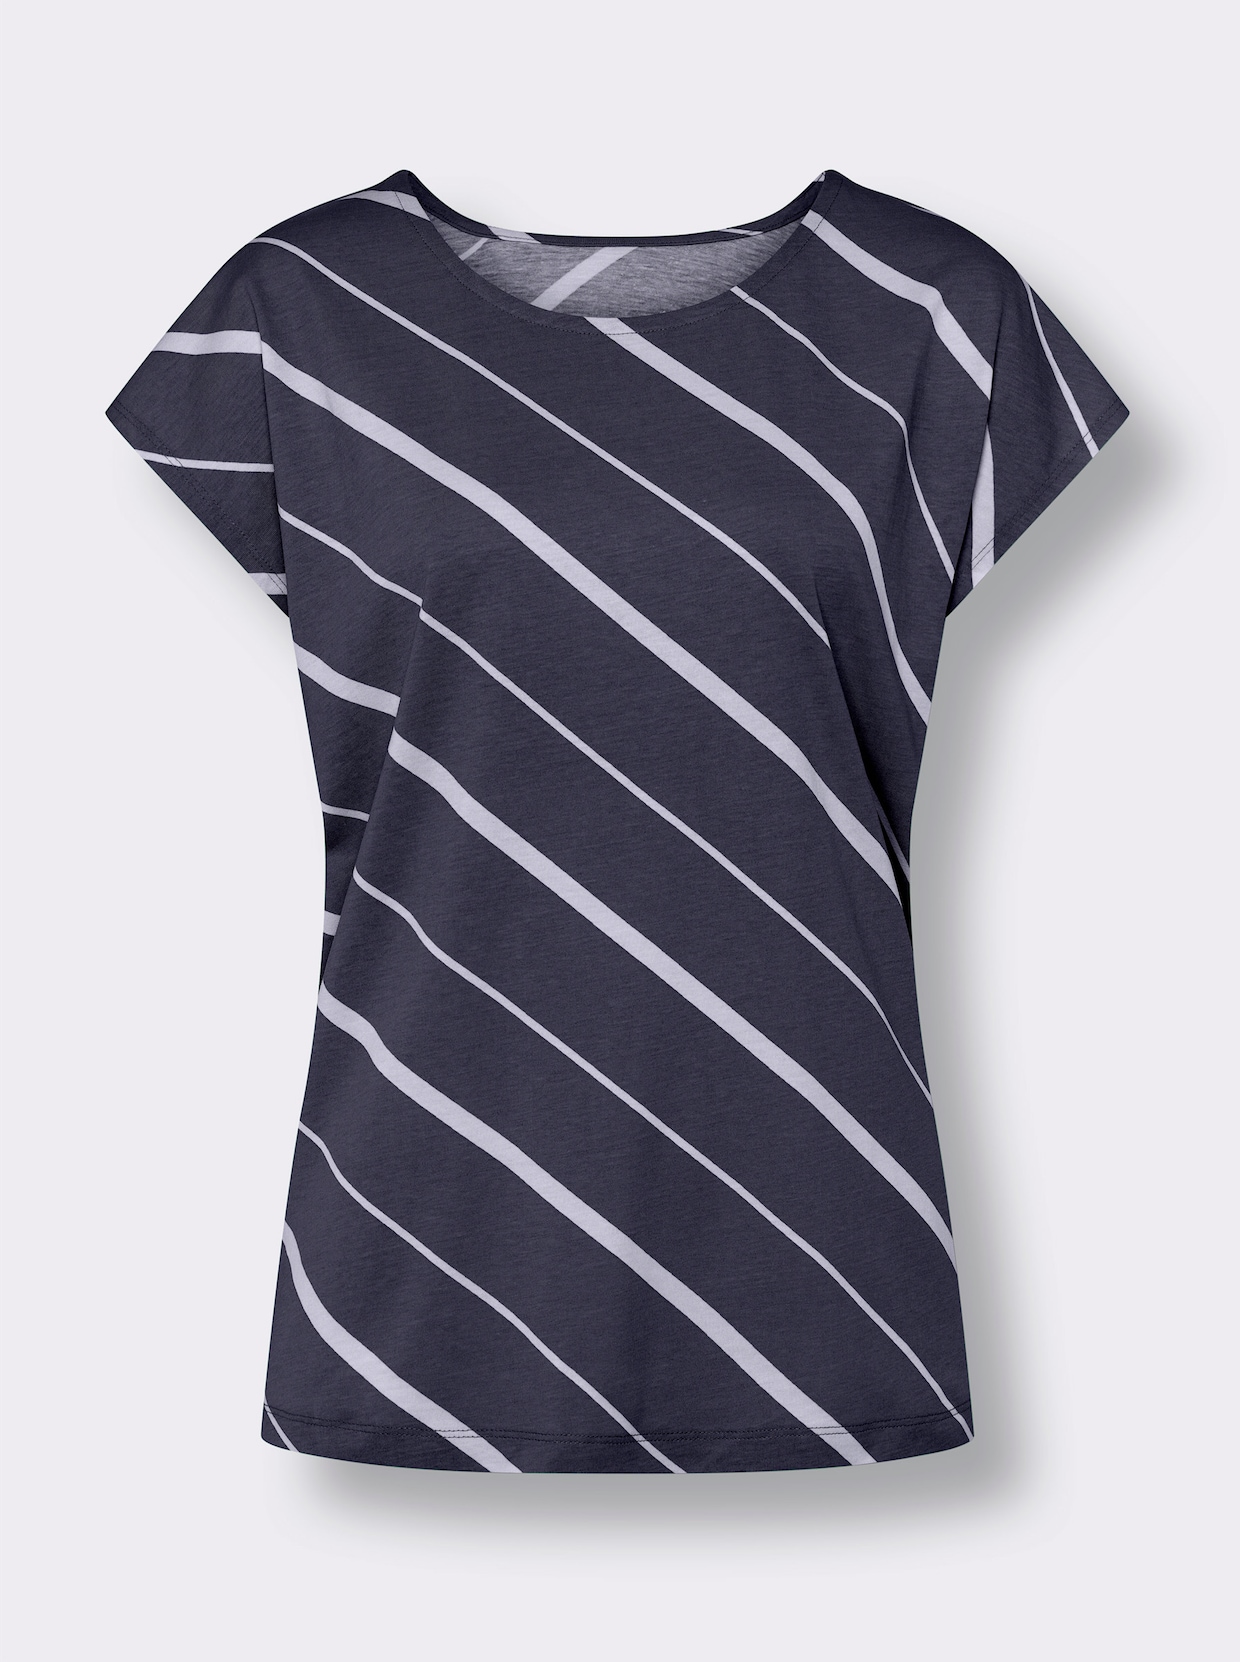 Tričko s krátkým rukávem - námořnická modrá-bílá-proužek